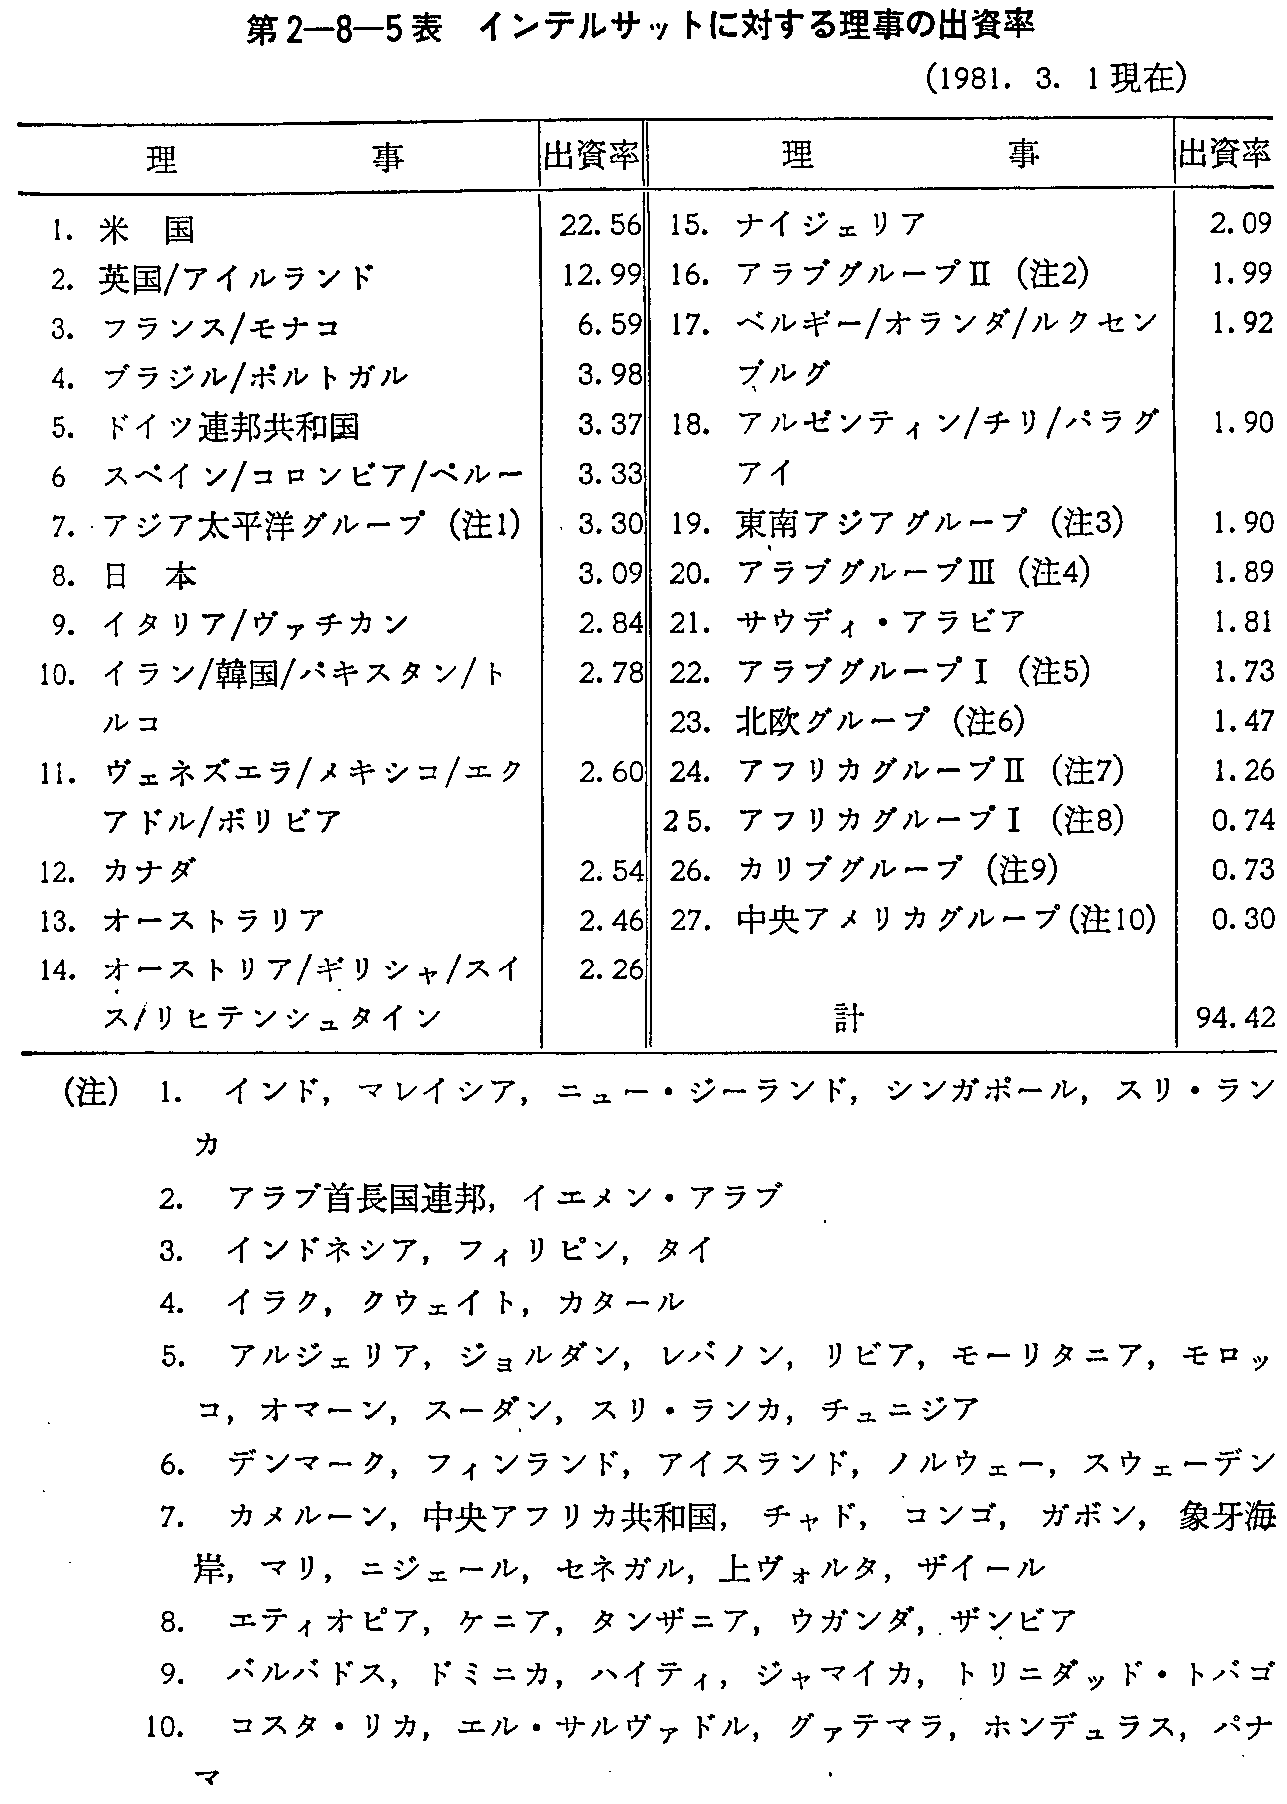 2-8-5\ CeTbgɑ΂闝̏o(1981.3.1)